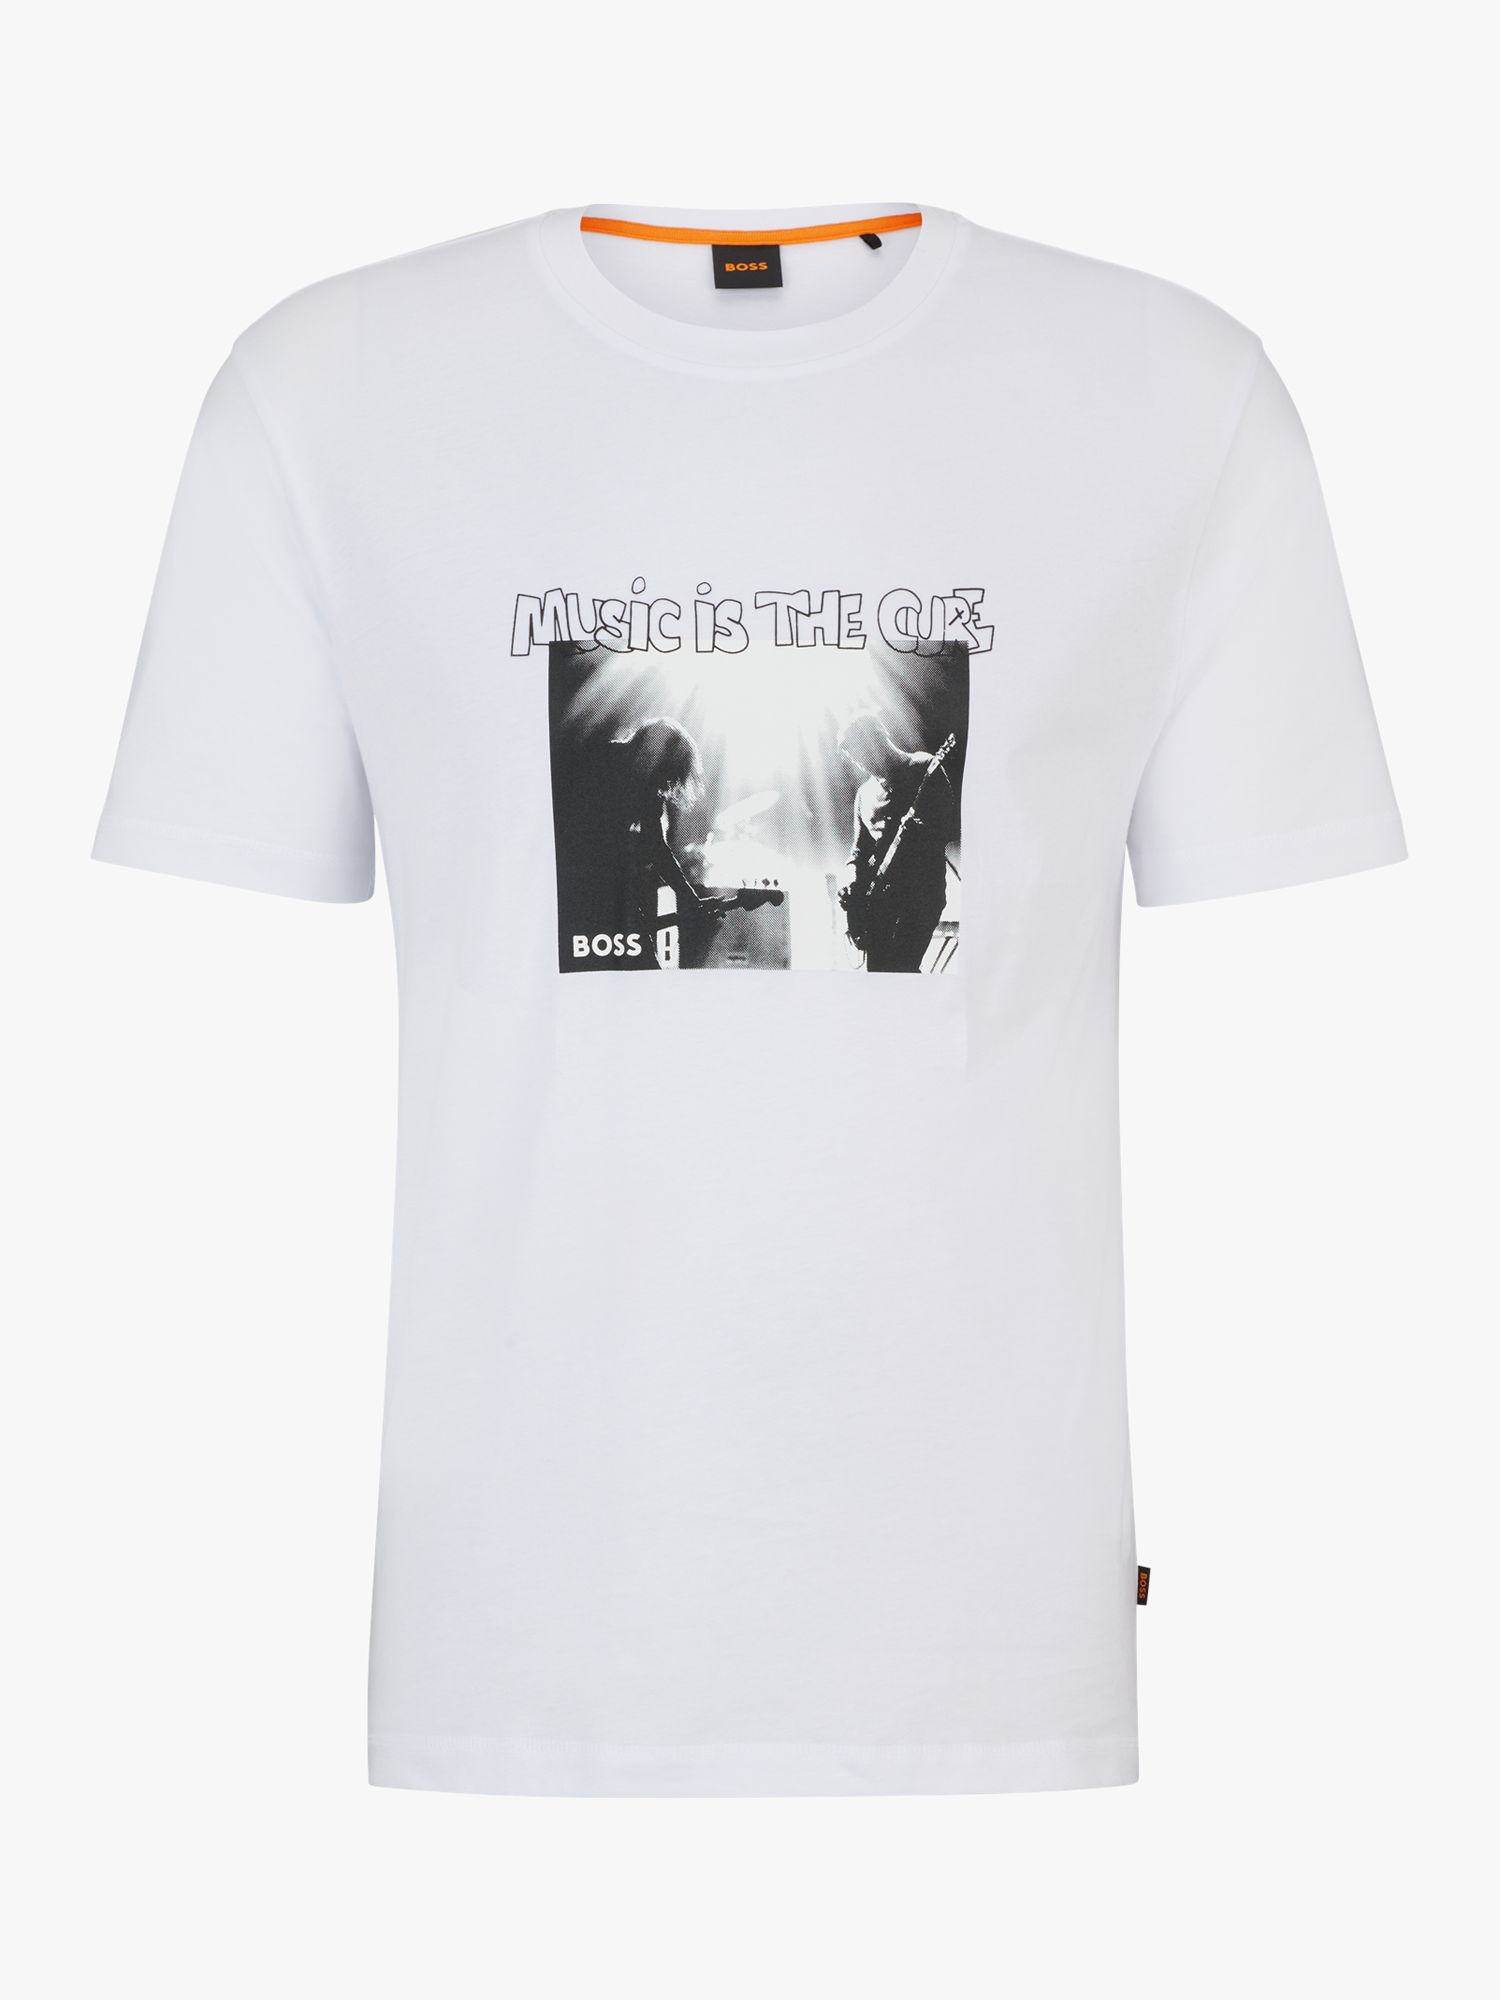 BOSS TeScorpion 101 Natural T-Shirt, White/Black, XXXL